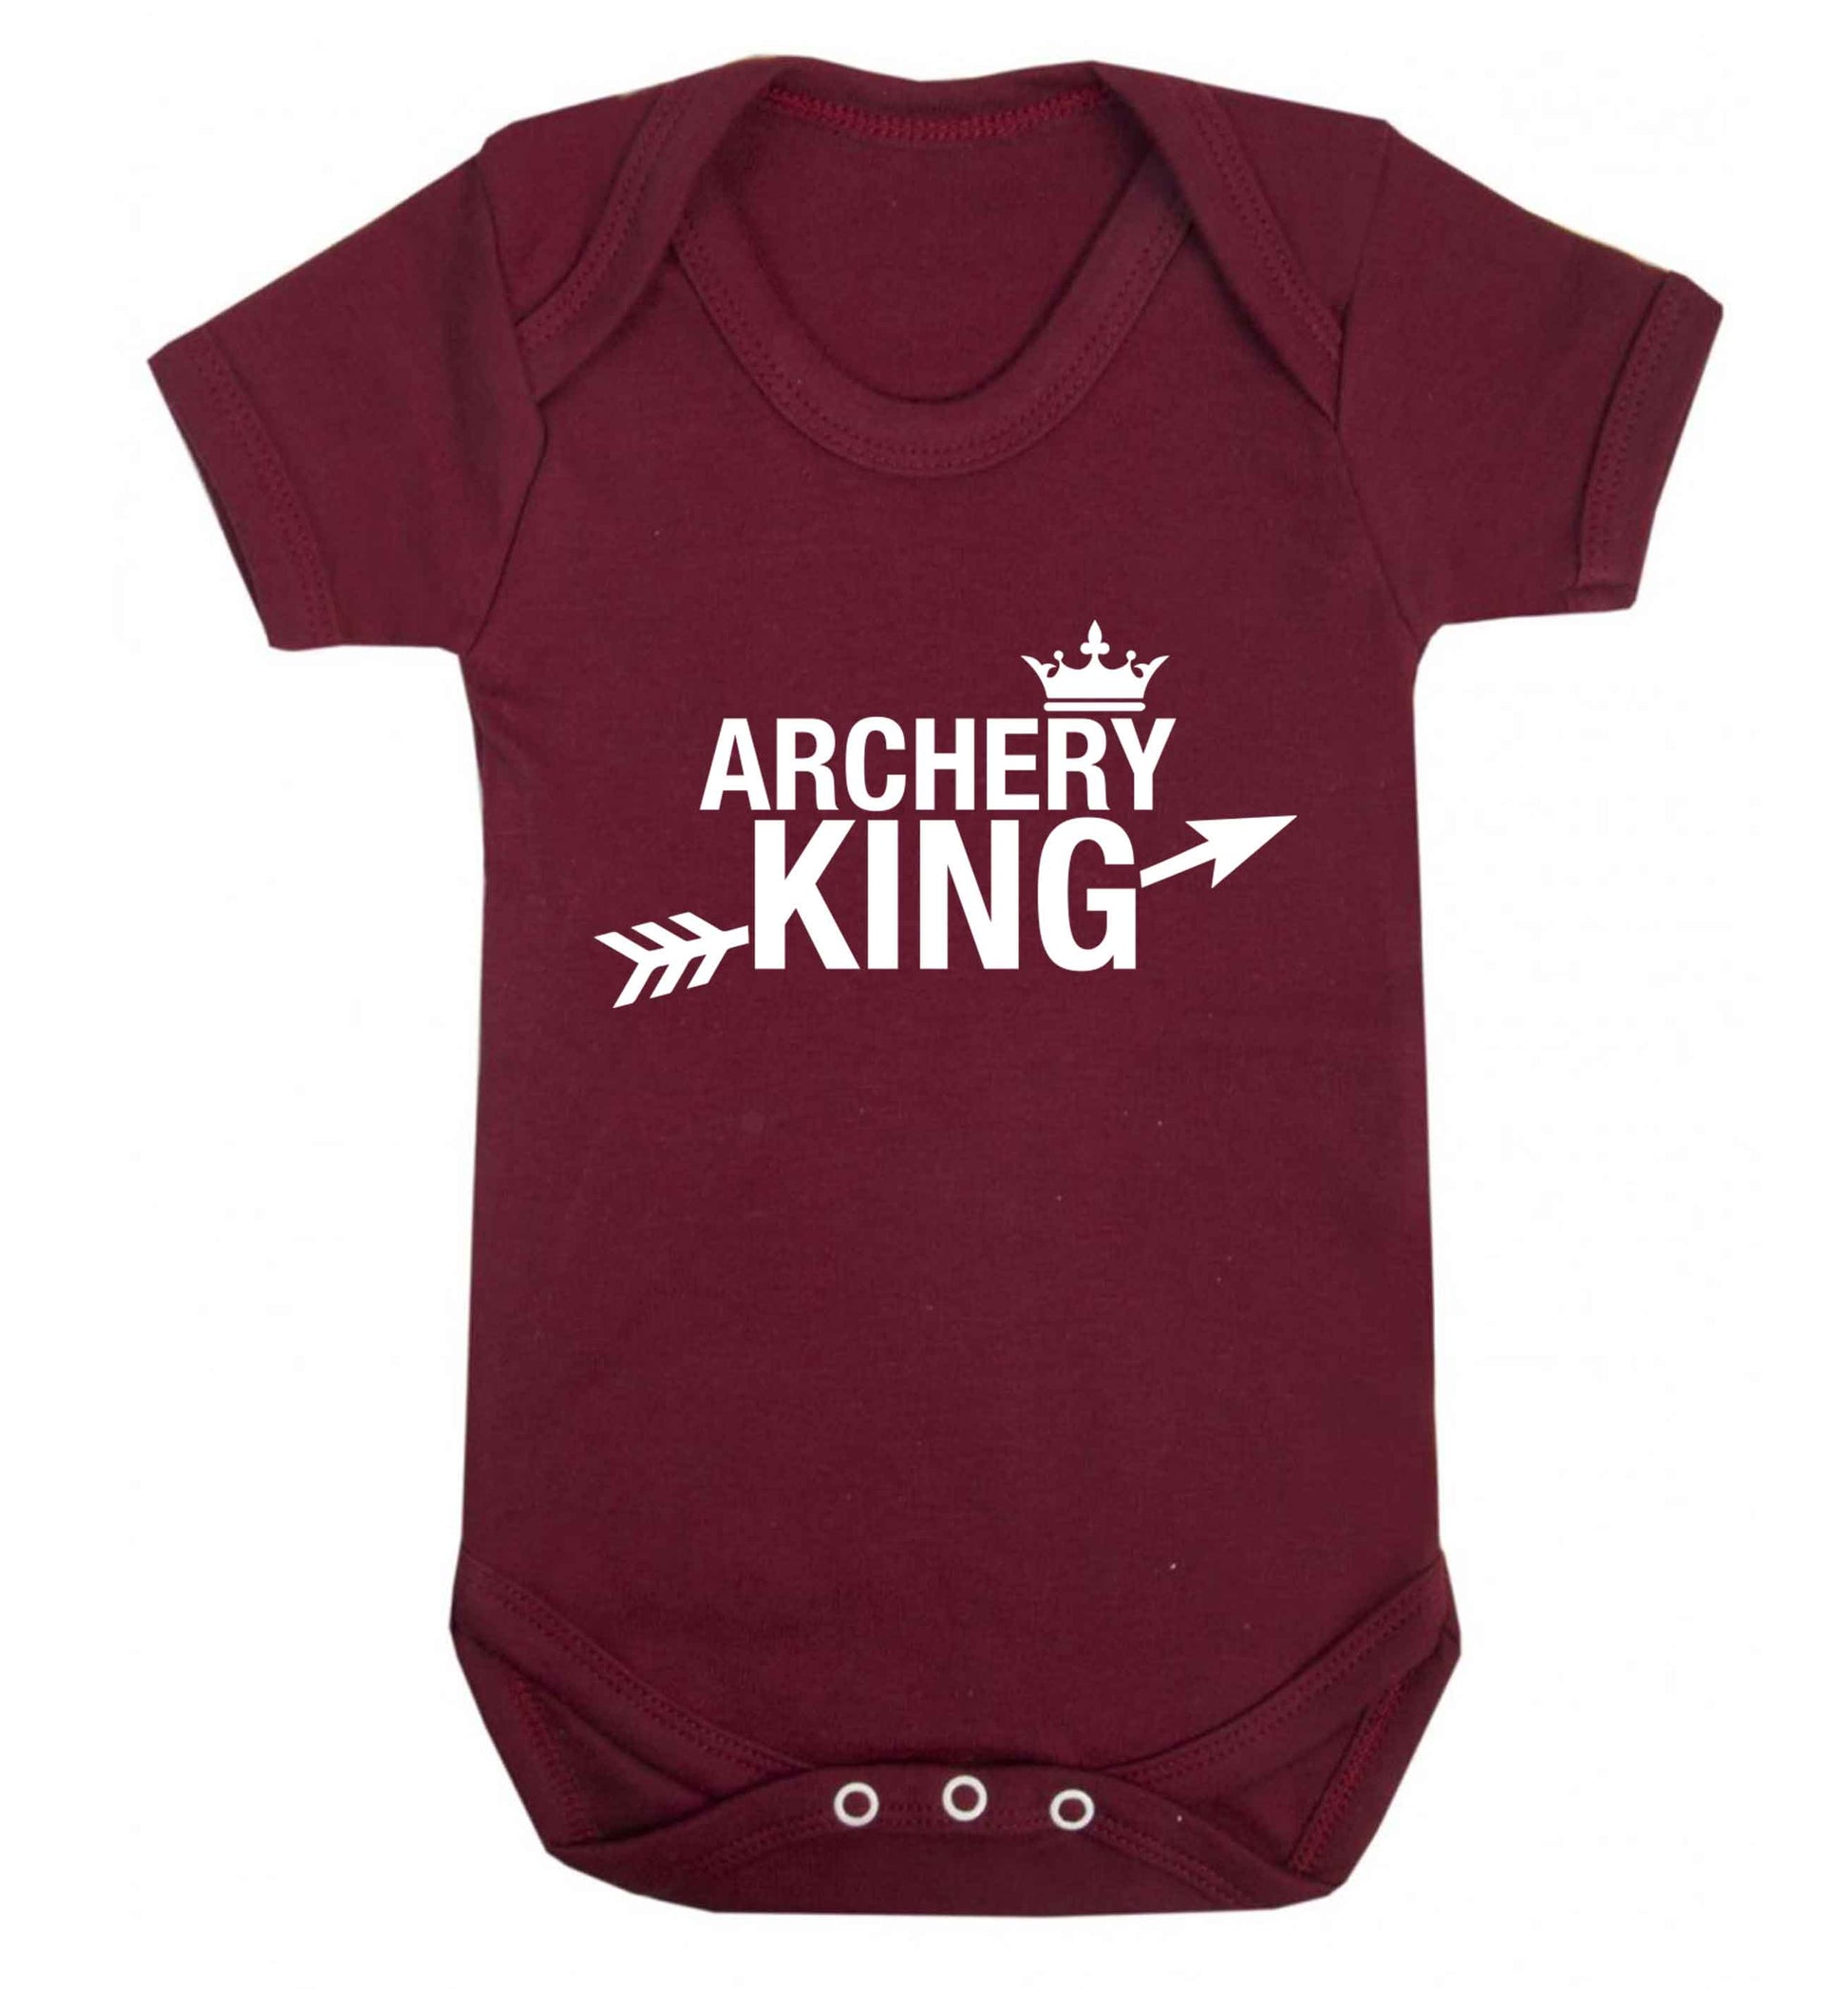 Archery king Baby Vest maroon 18-24 months